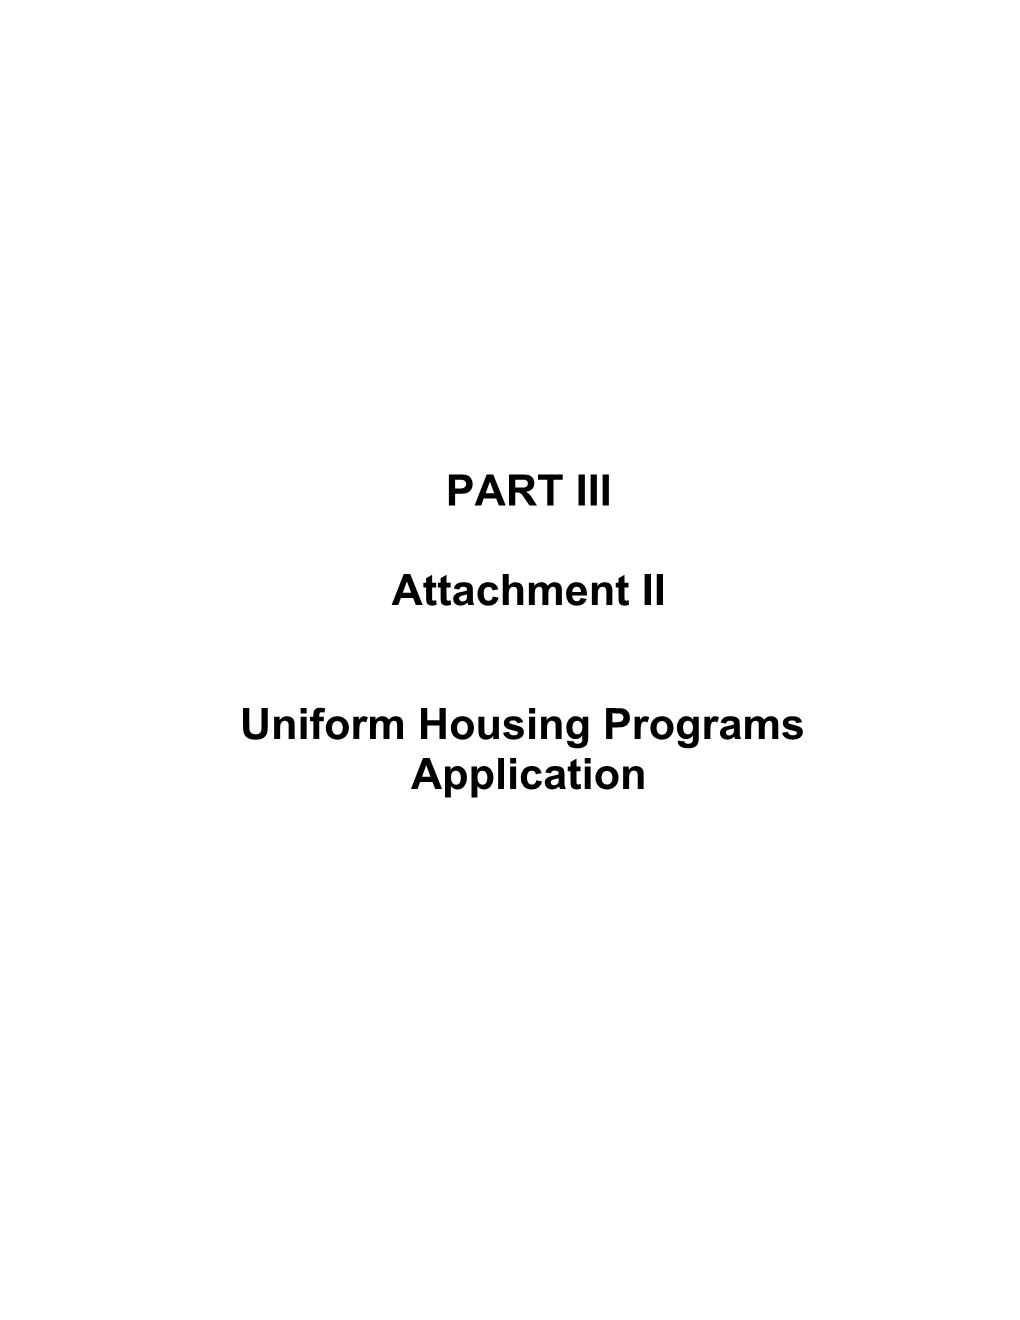 Part II: Uniform Housing Programs Application